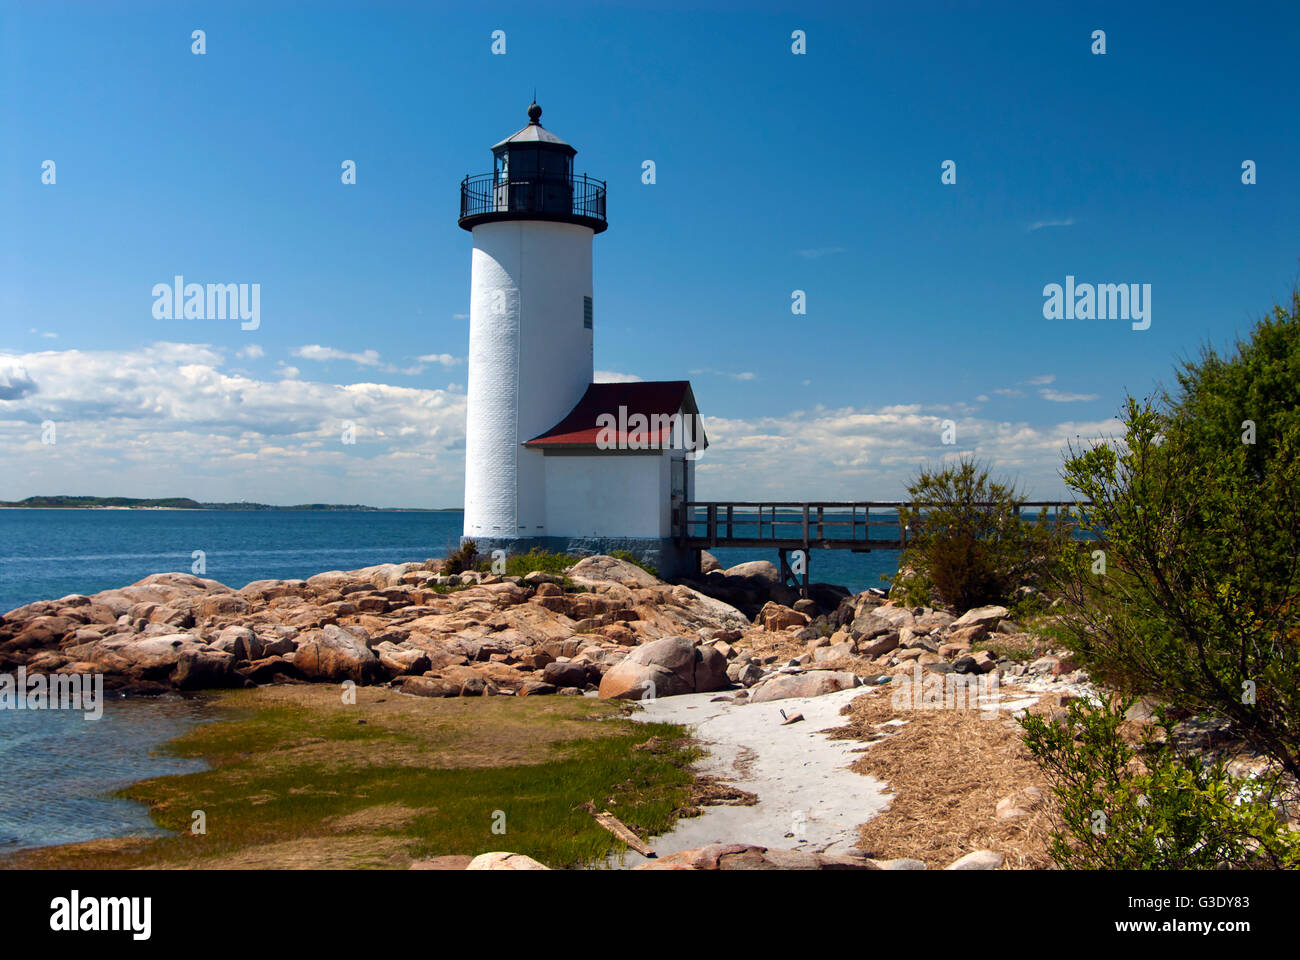 Annisquam lighthouse overlooks harbor along rocky coast in Massachusetts. Stock Photo